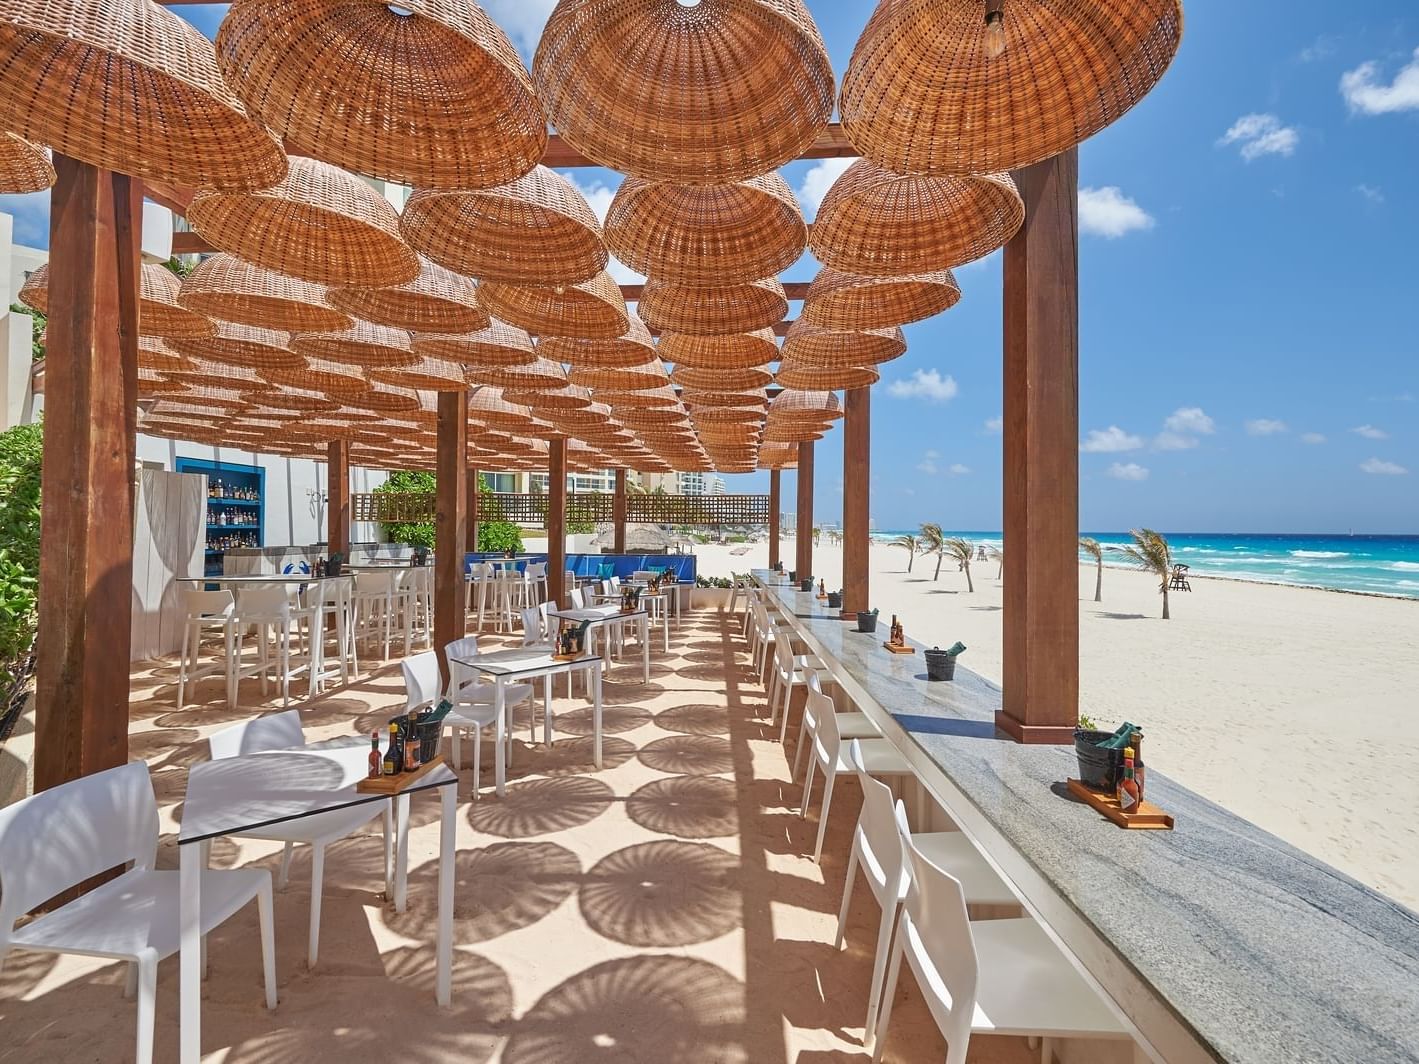 Sea Corner restaurant on the beach near La Colección Resorts